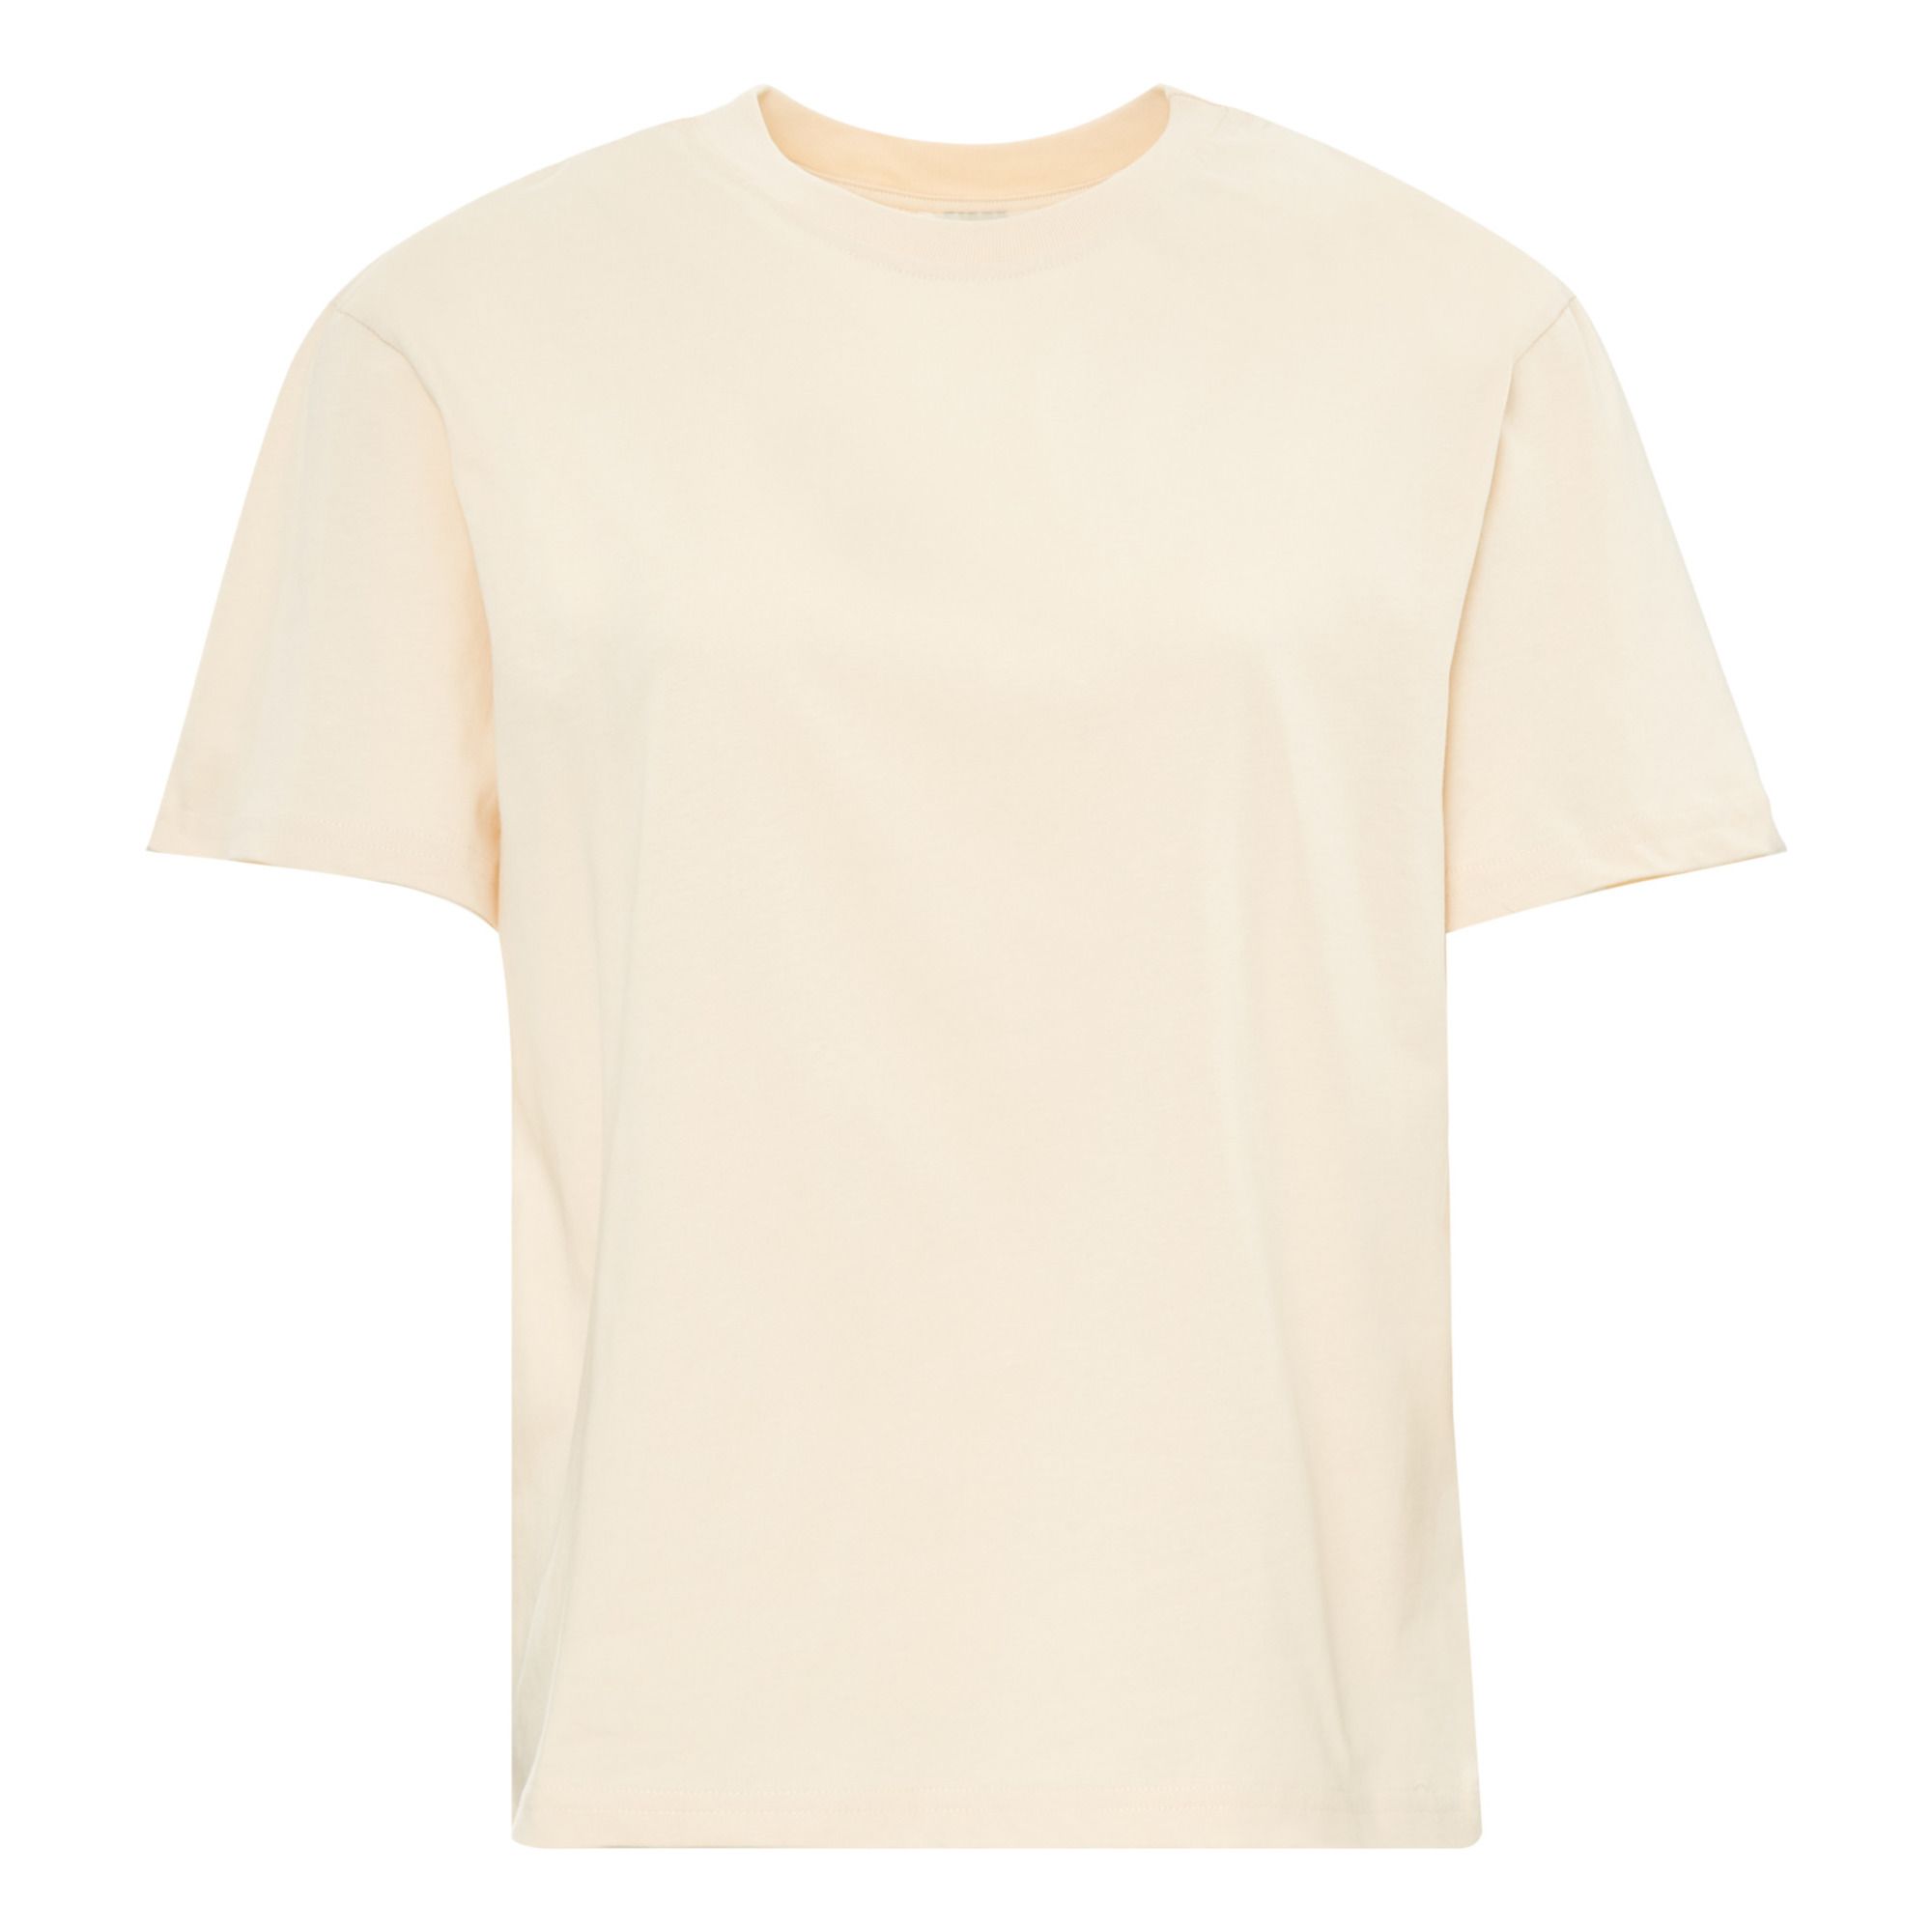 Signe - T-Shirt Nida Coton Bio - Femme - Crème